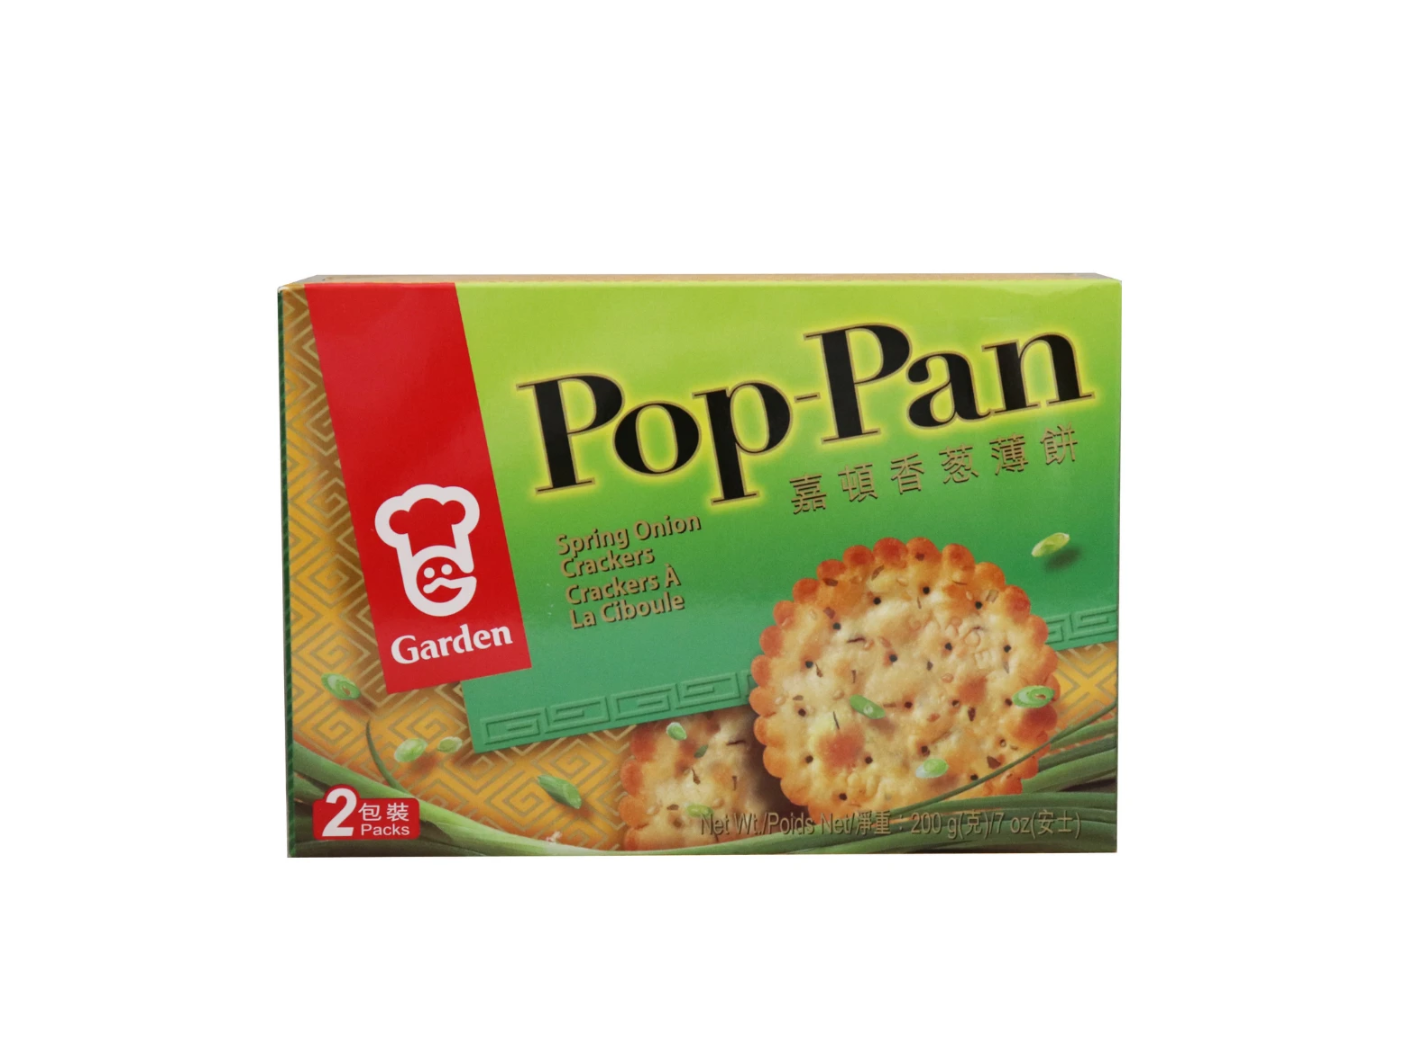 Garden Pop-Pan spring onion crackers (嘉頓香蔥薄餅)